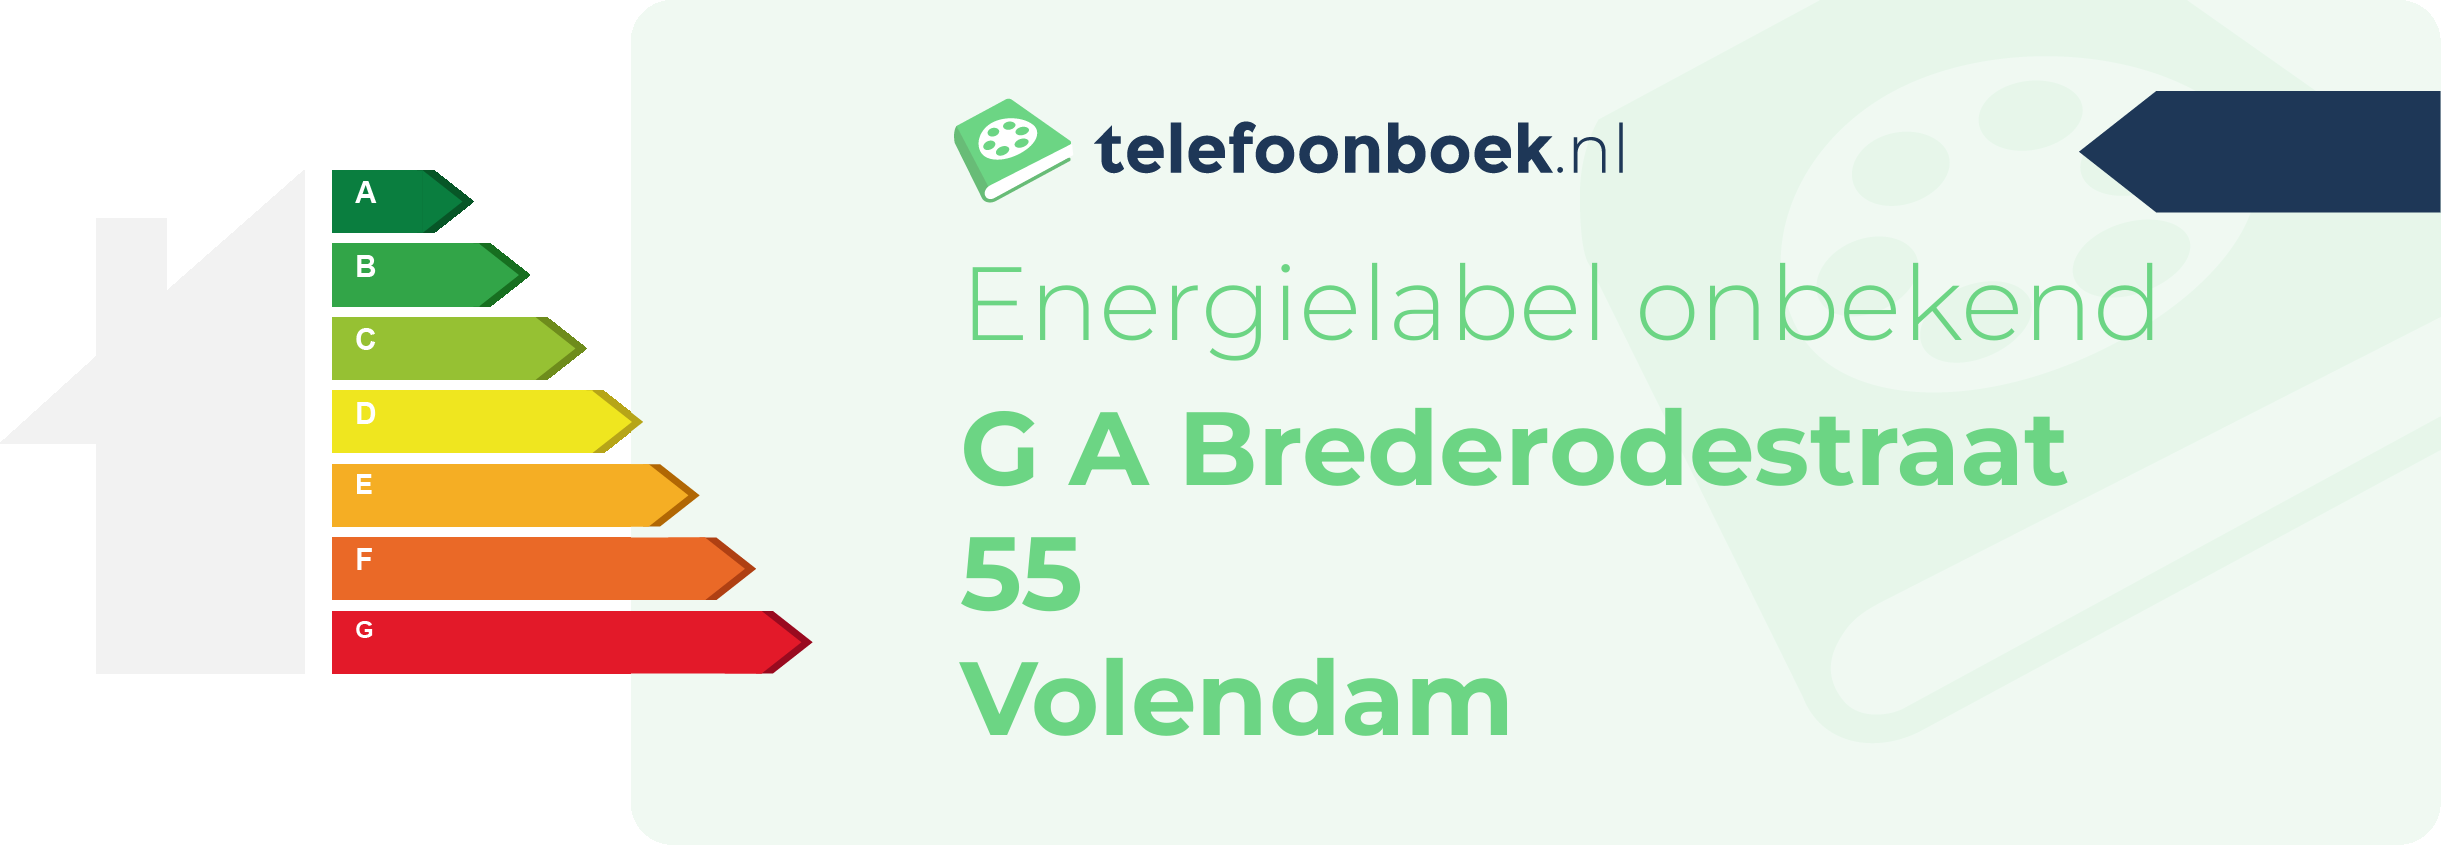 Energielabel G A Brederodestraat 55 Volendam